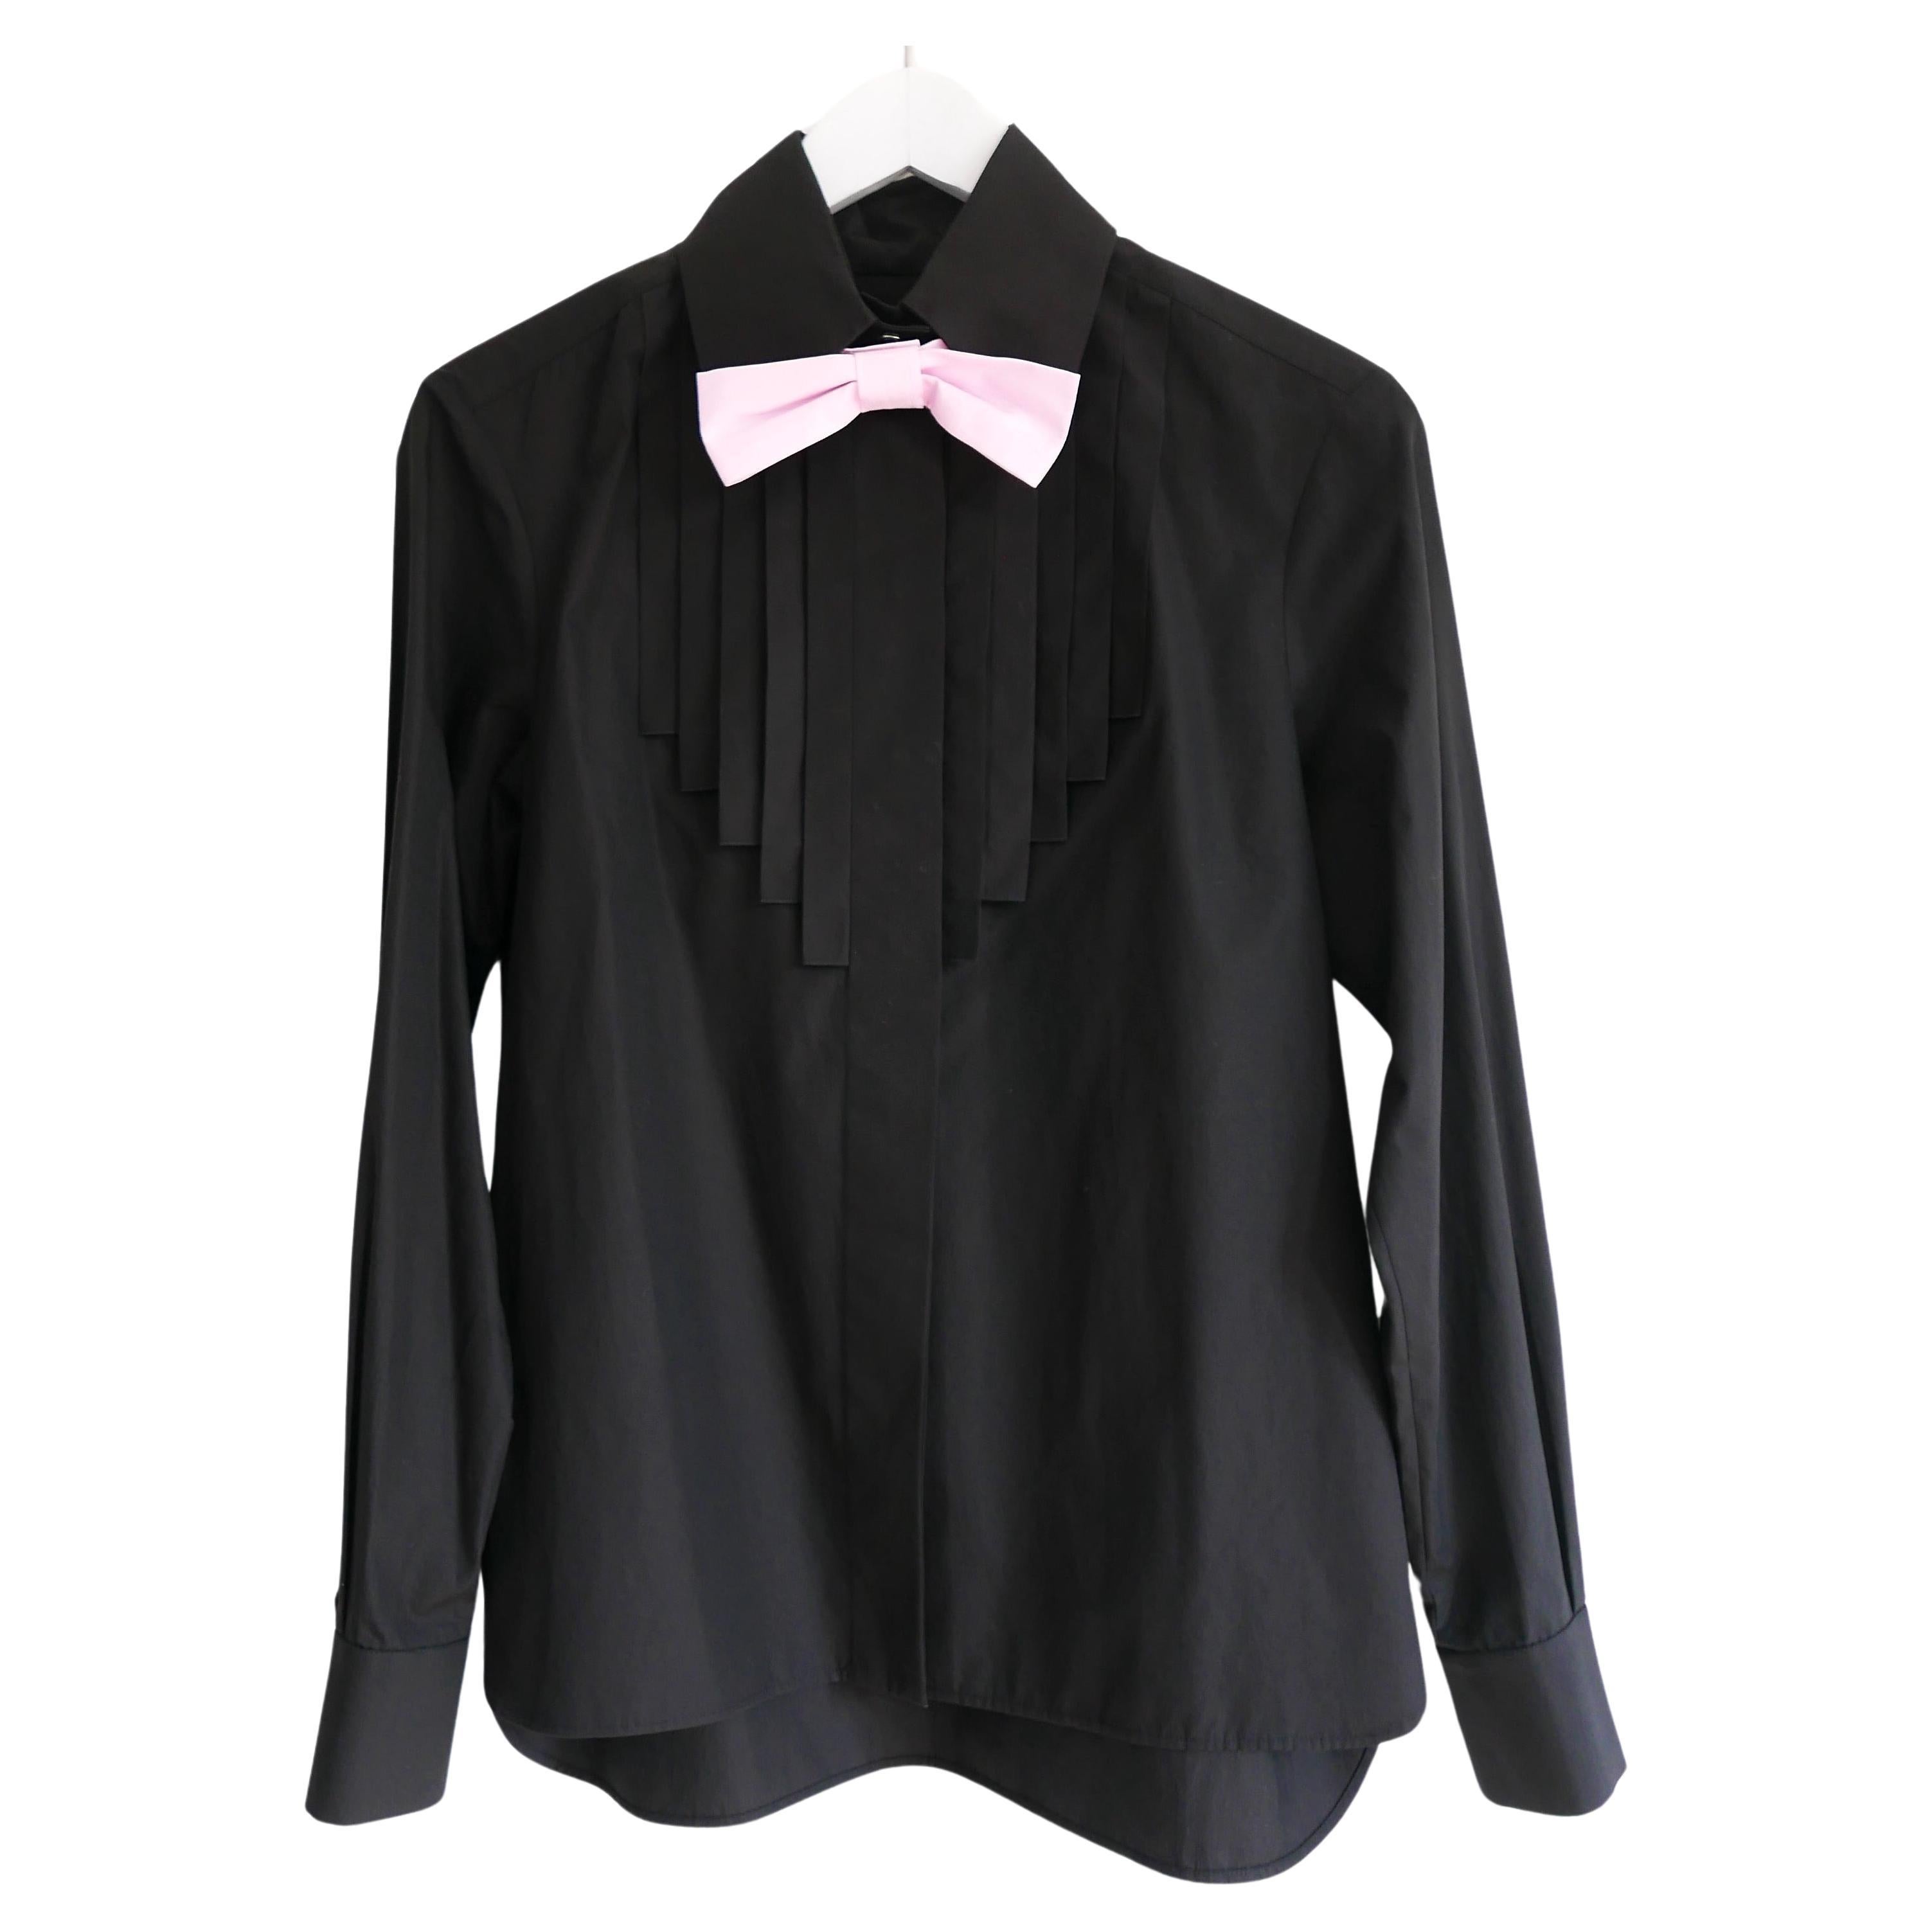 Chanel AW07 Black Tuxedo Shirt w/Bow Tie For Sale